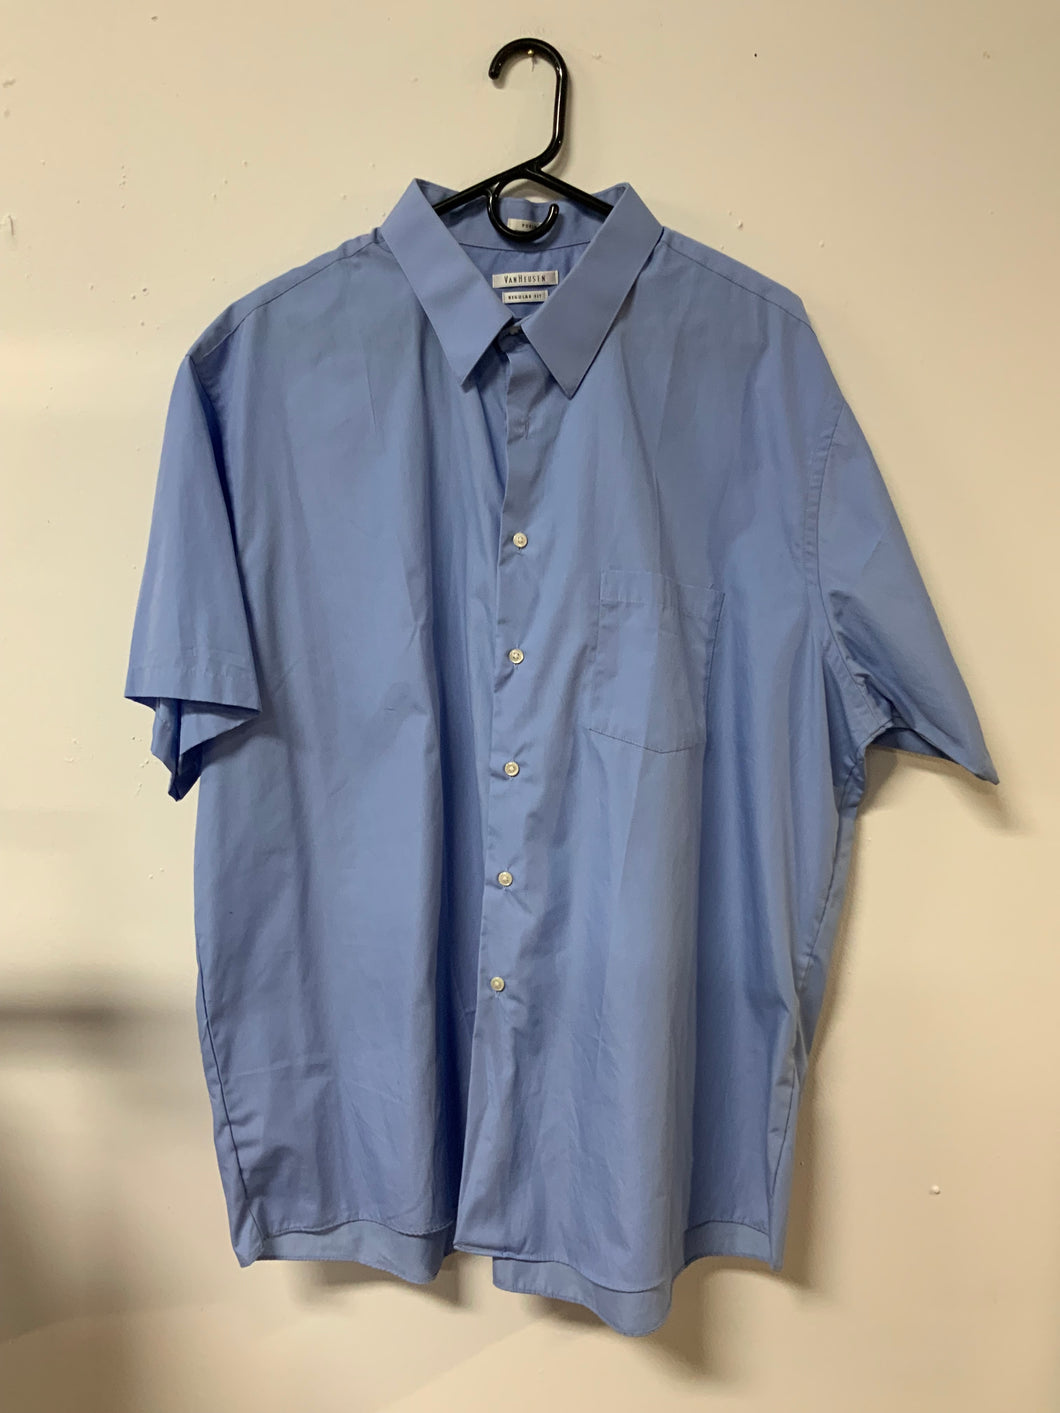 Van Heusen (18.5) blu btn shirt